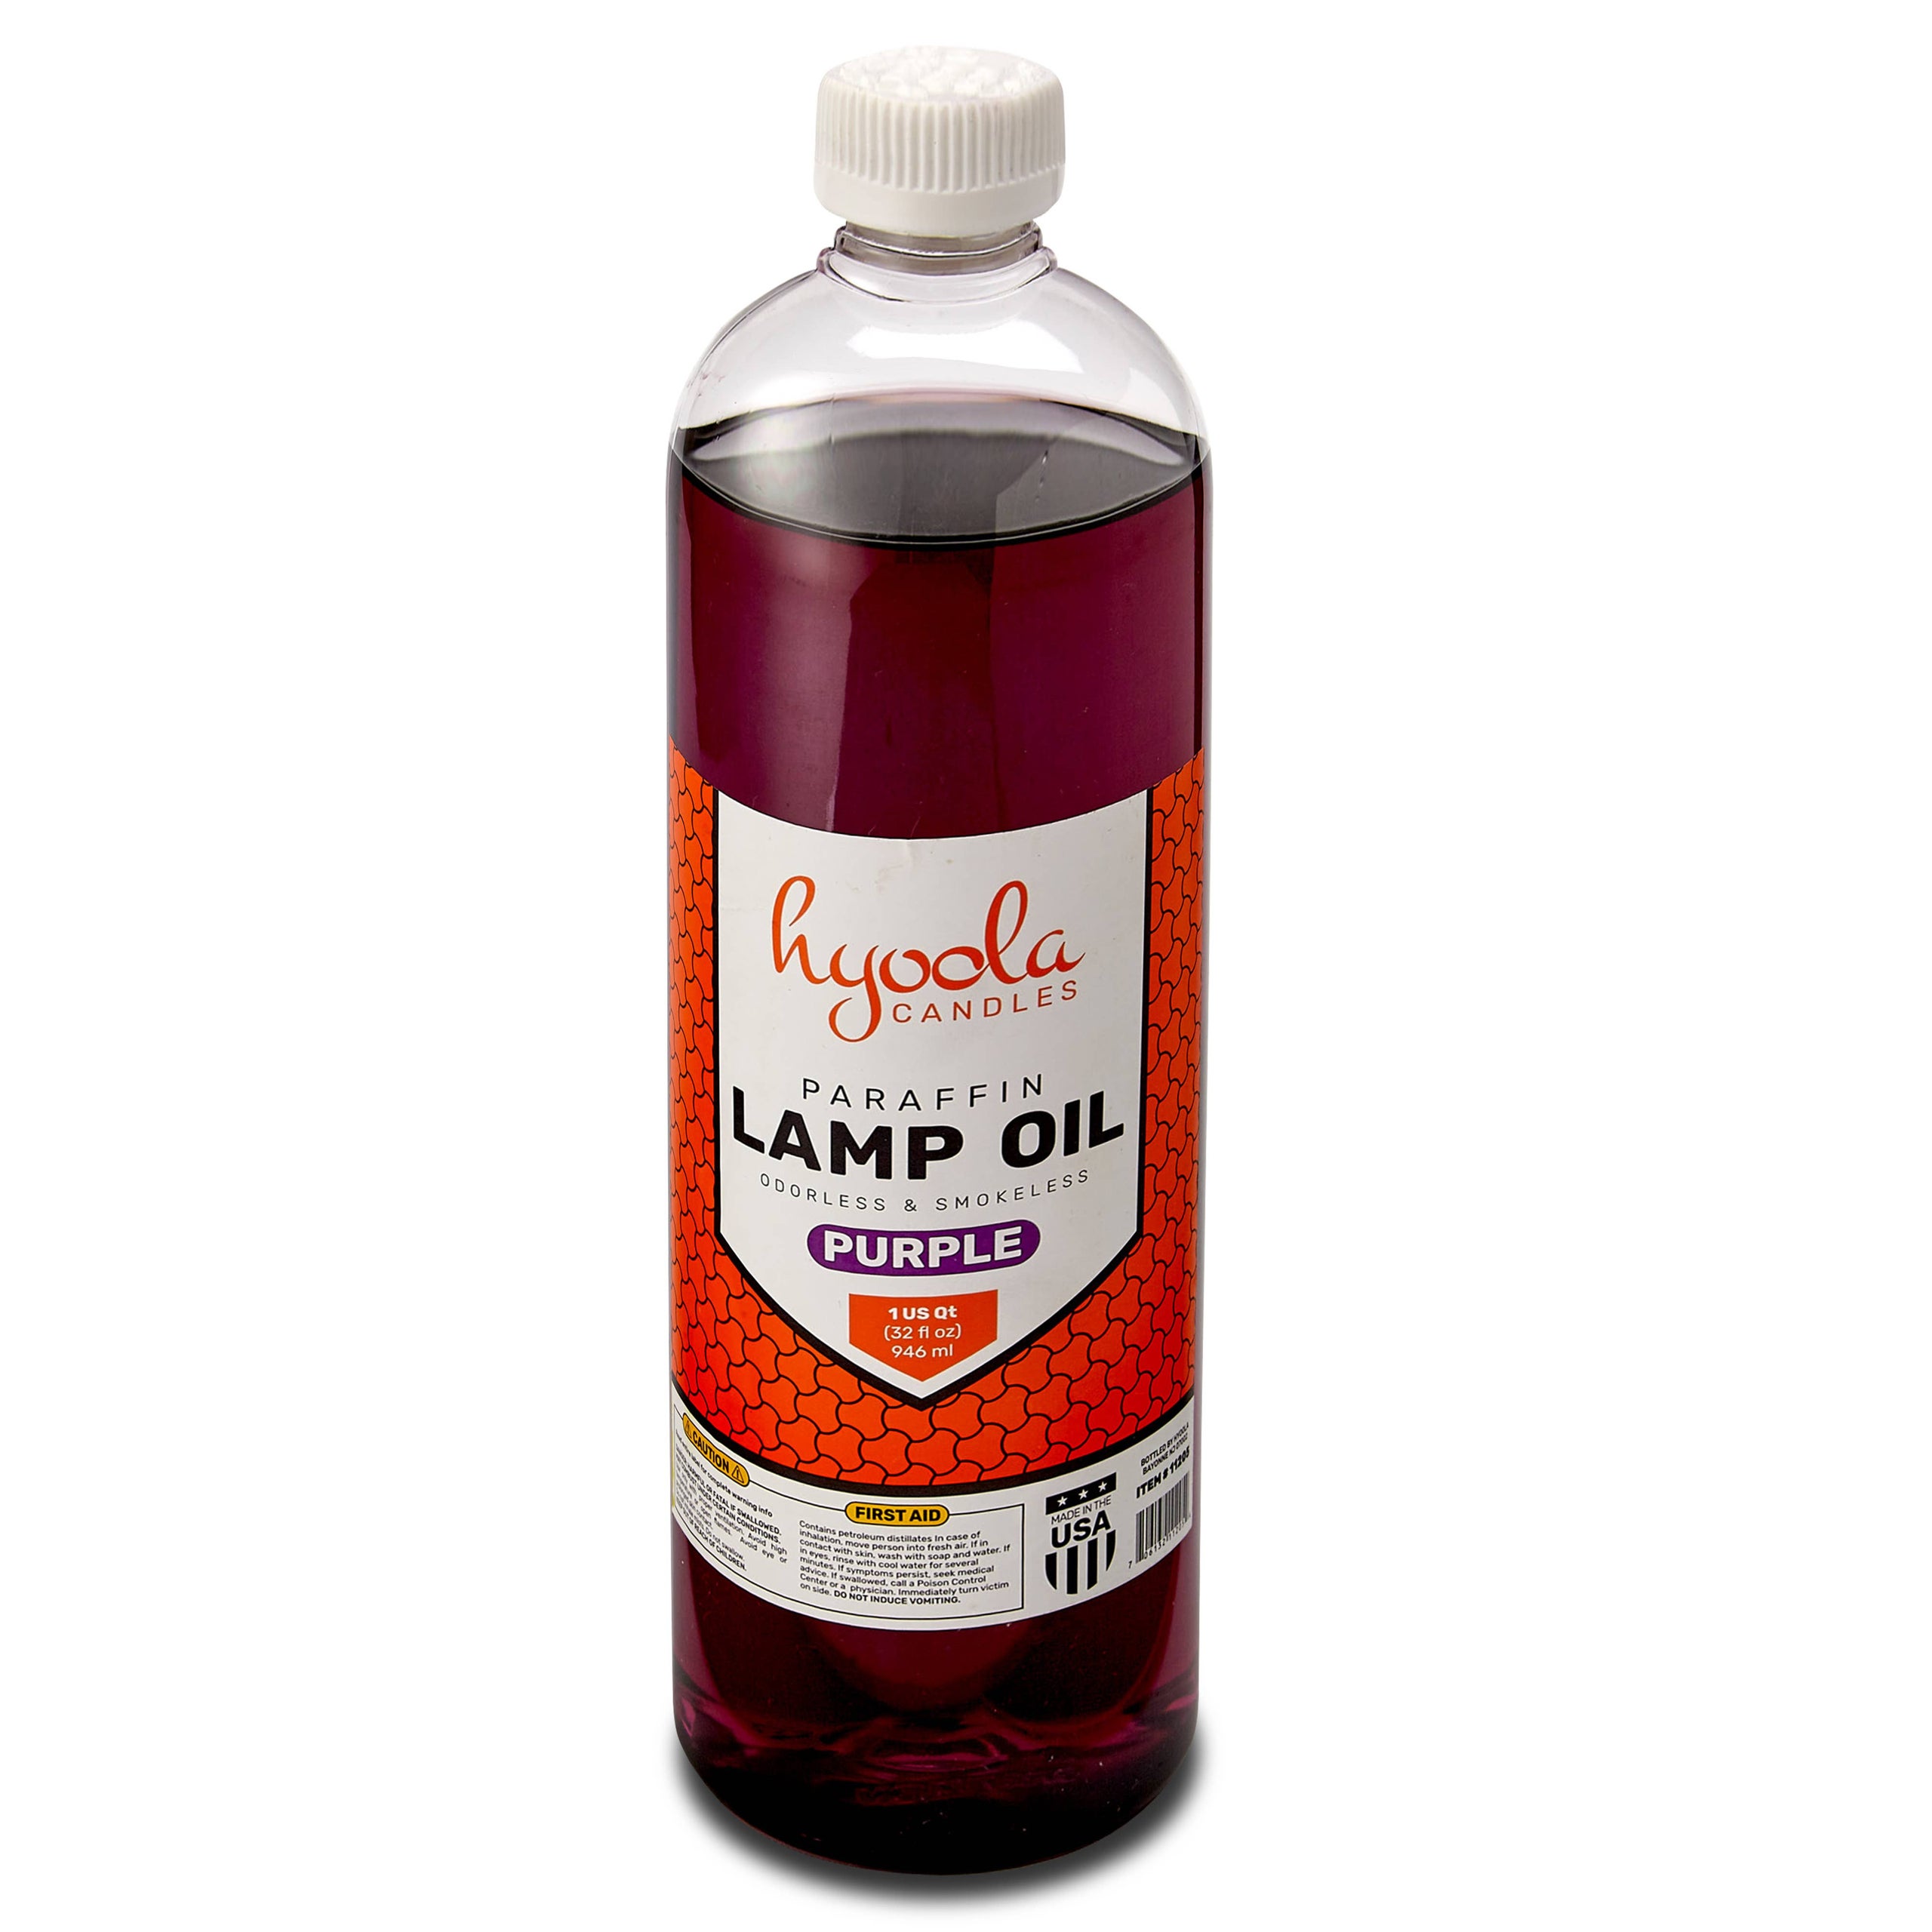 Hyoola - Purple Paraffin Lamp Oil